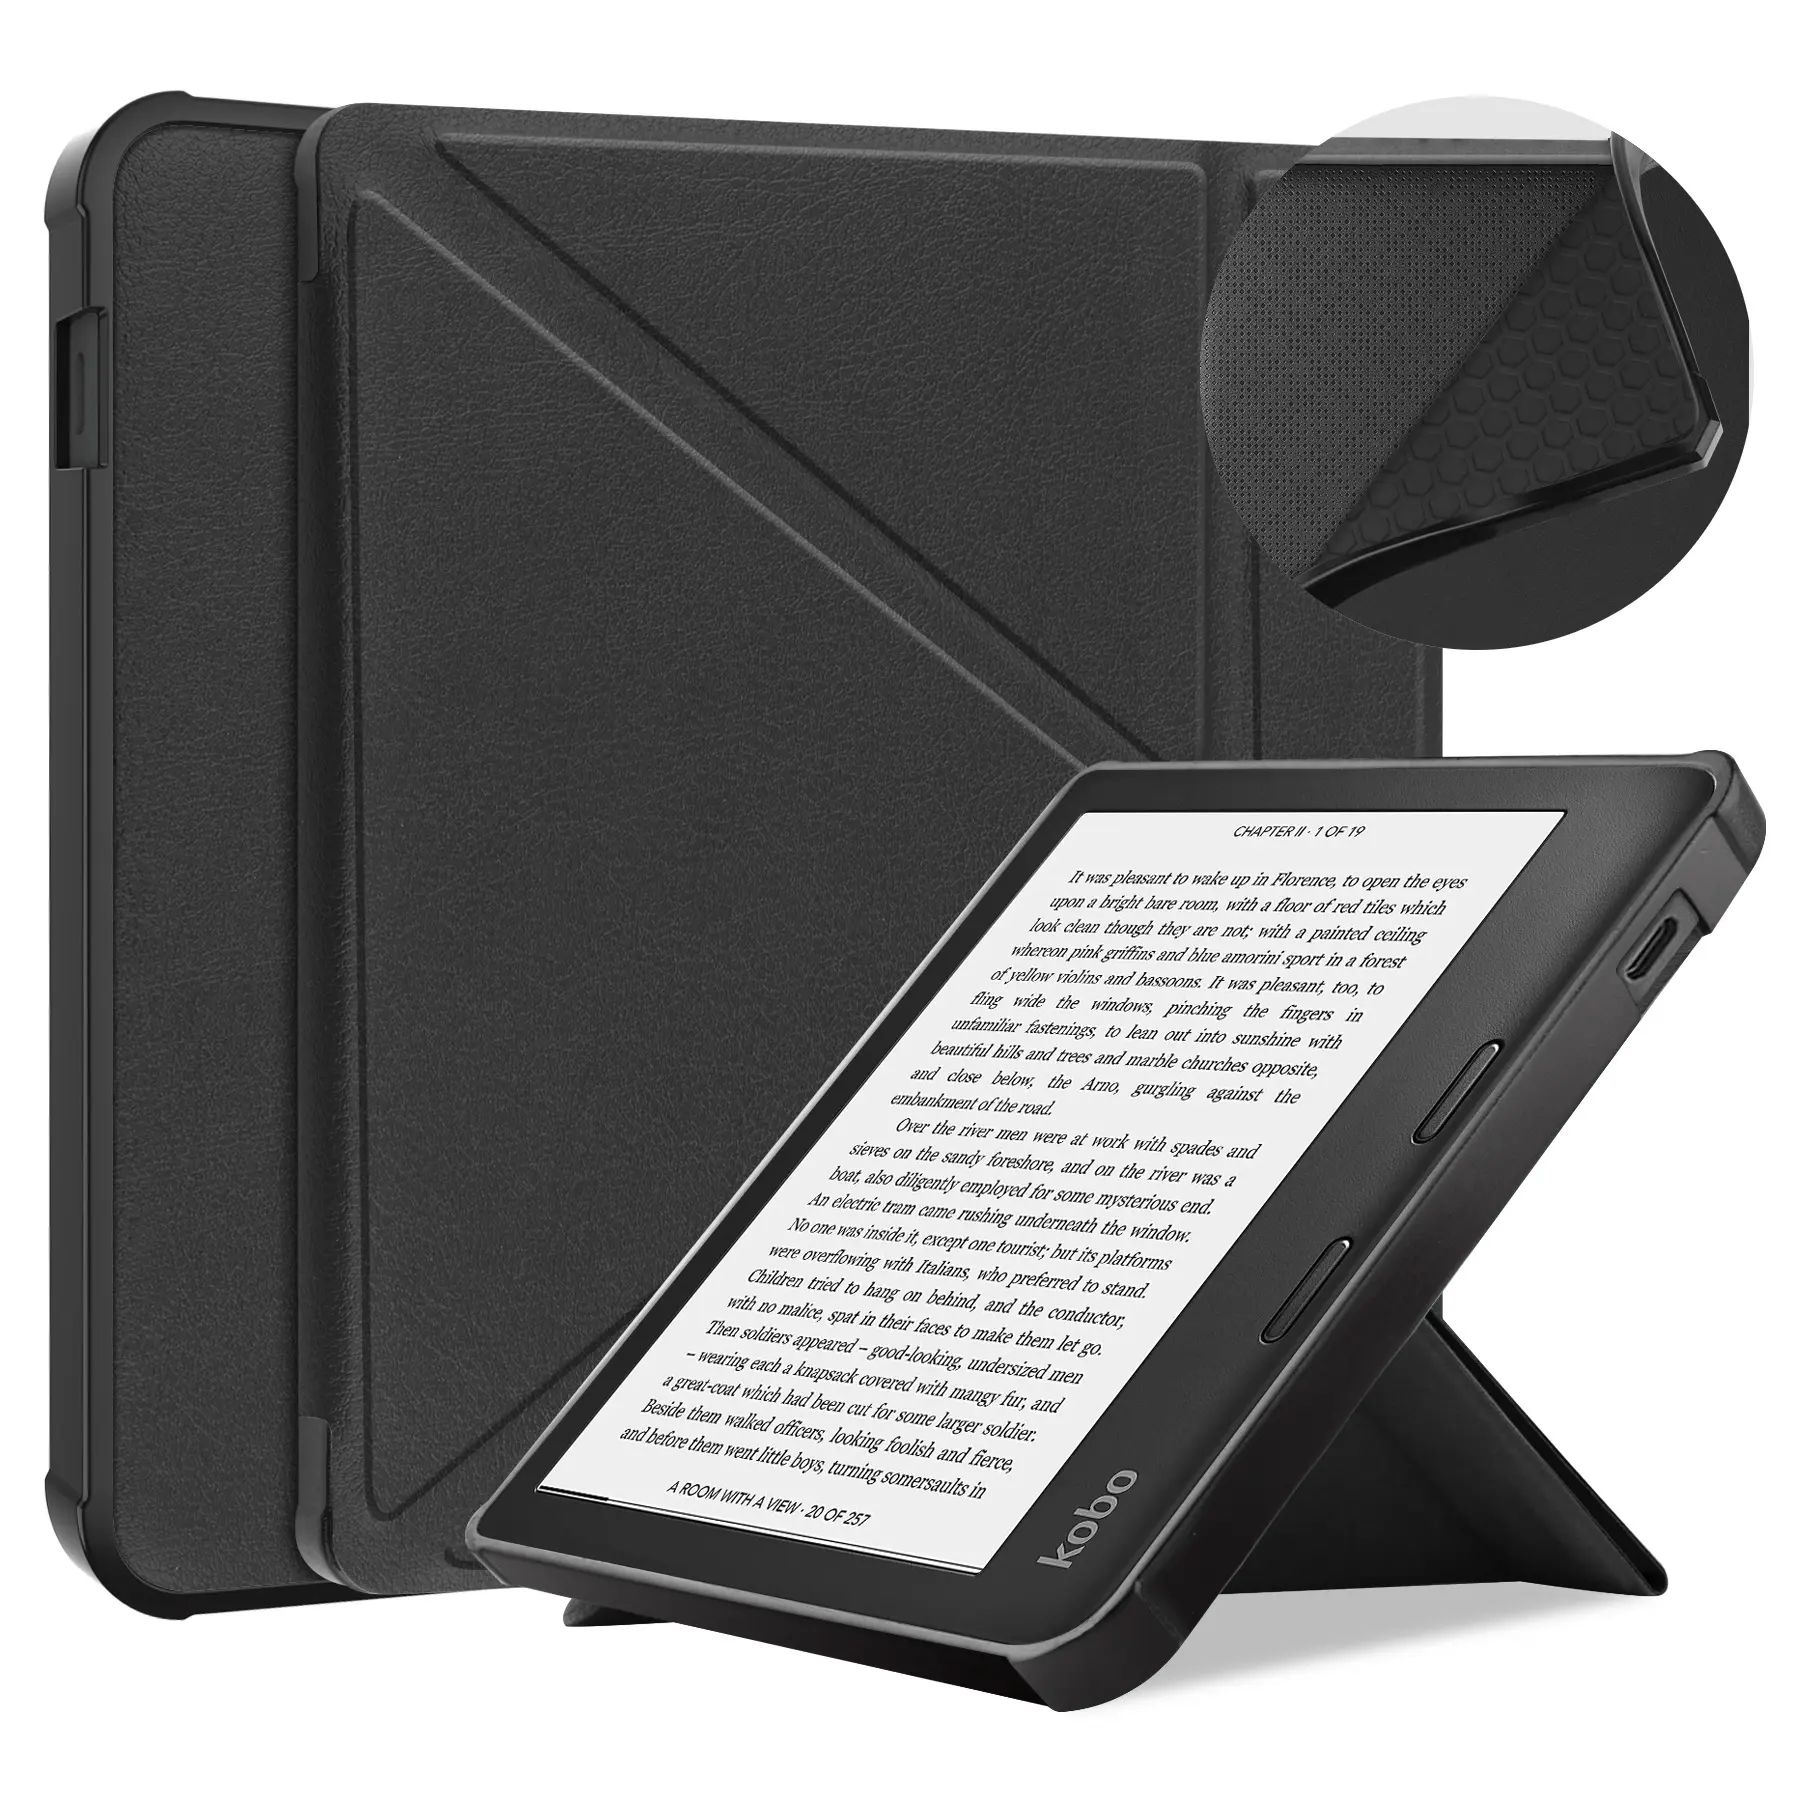 Soft TPU soft shell tablet cover case for Kobo Libra 2 7" Tablet